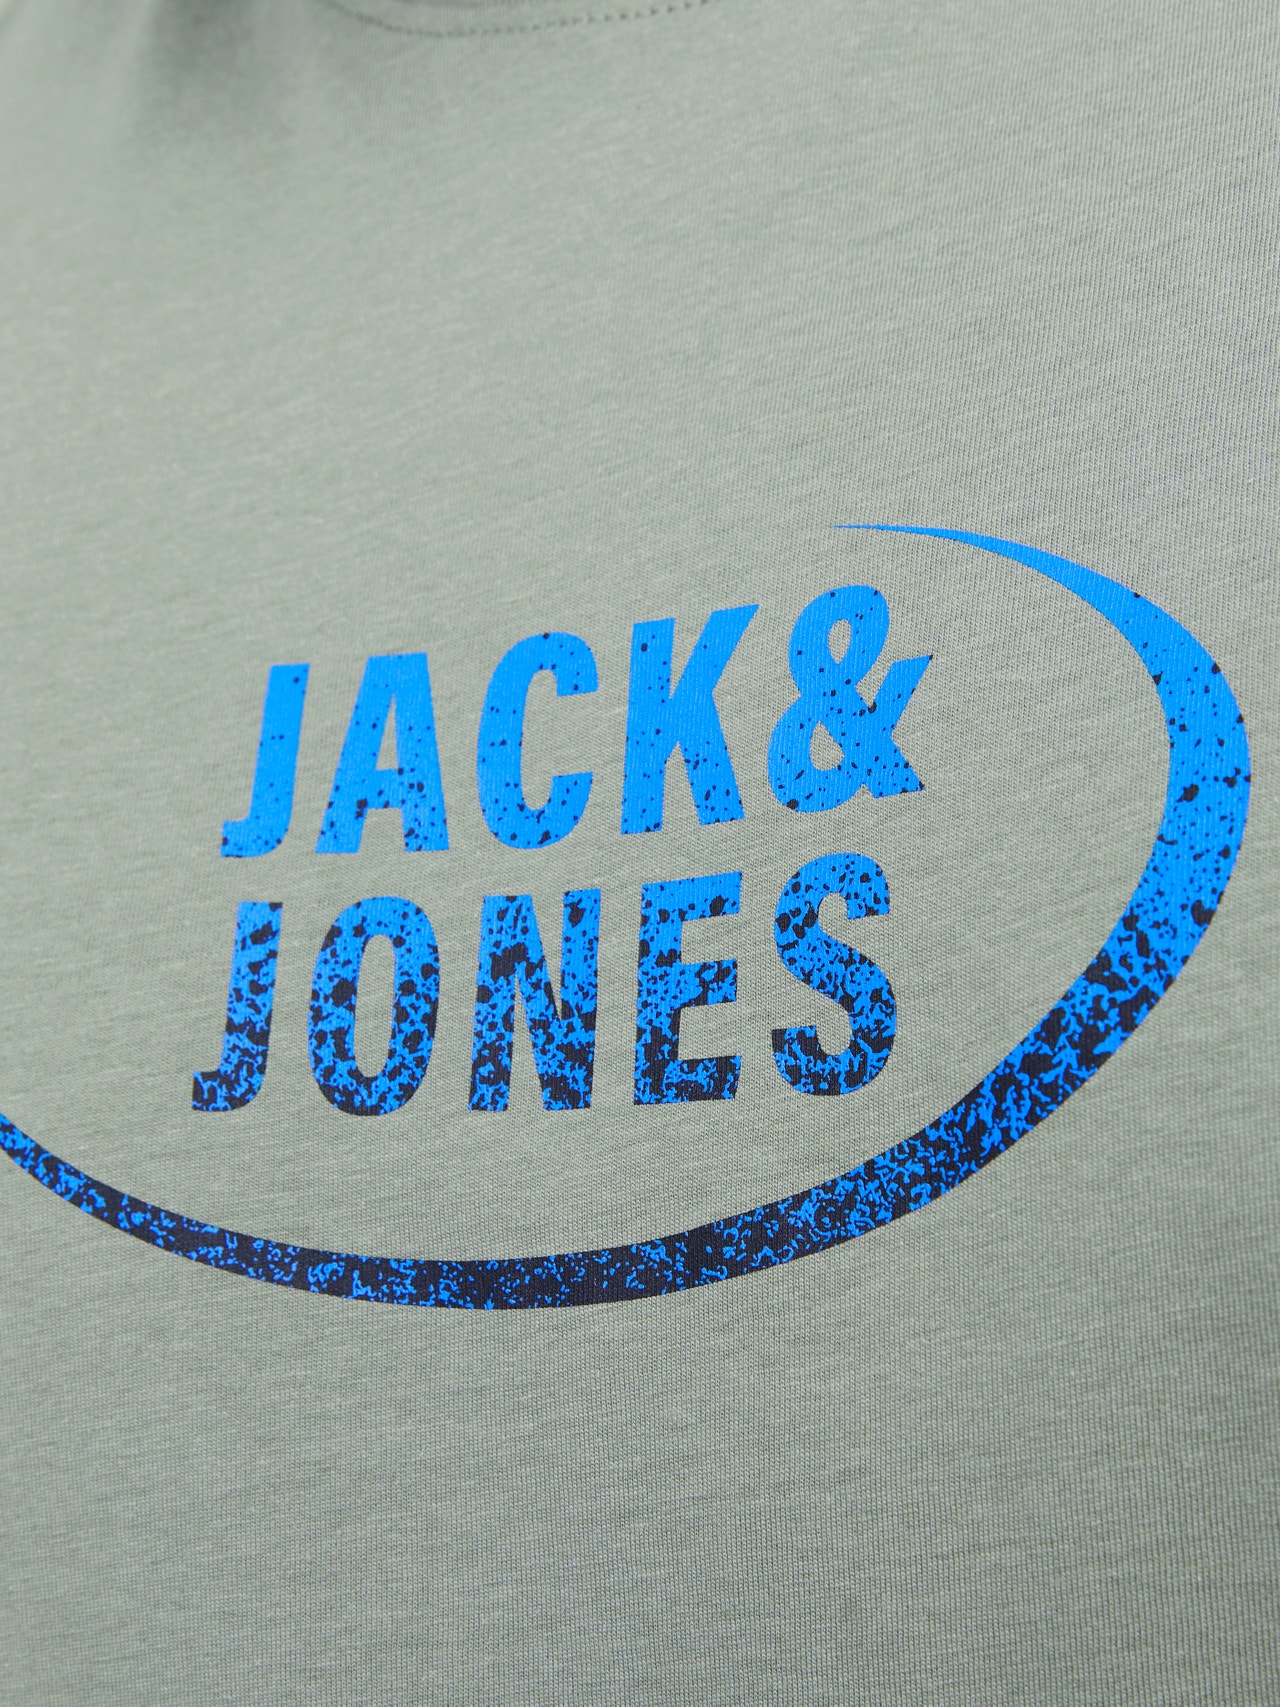 Jack & Jones Plus Size Logotyp T-shirt -Agave Green - 12270142